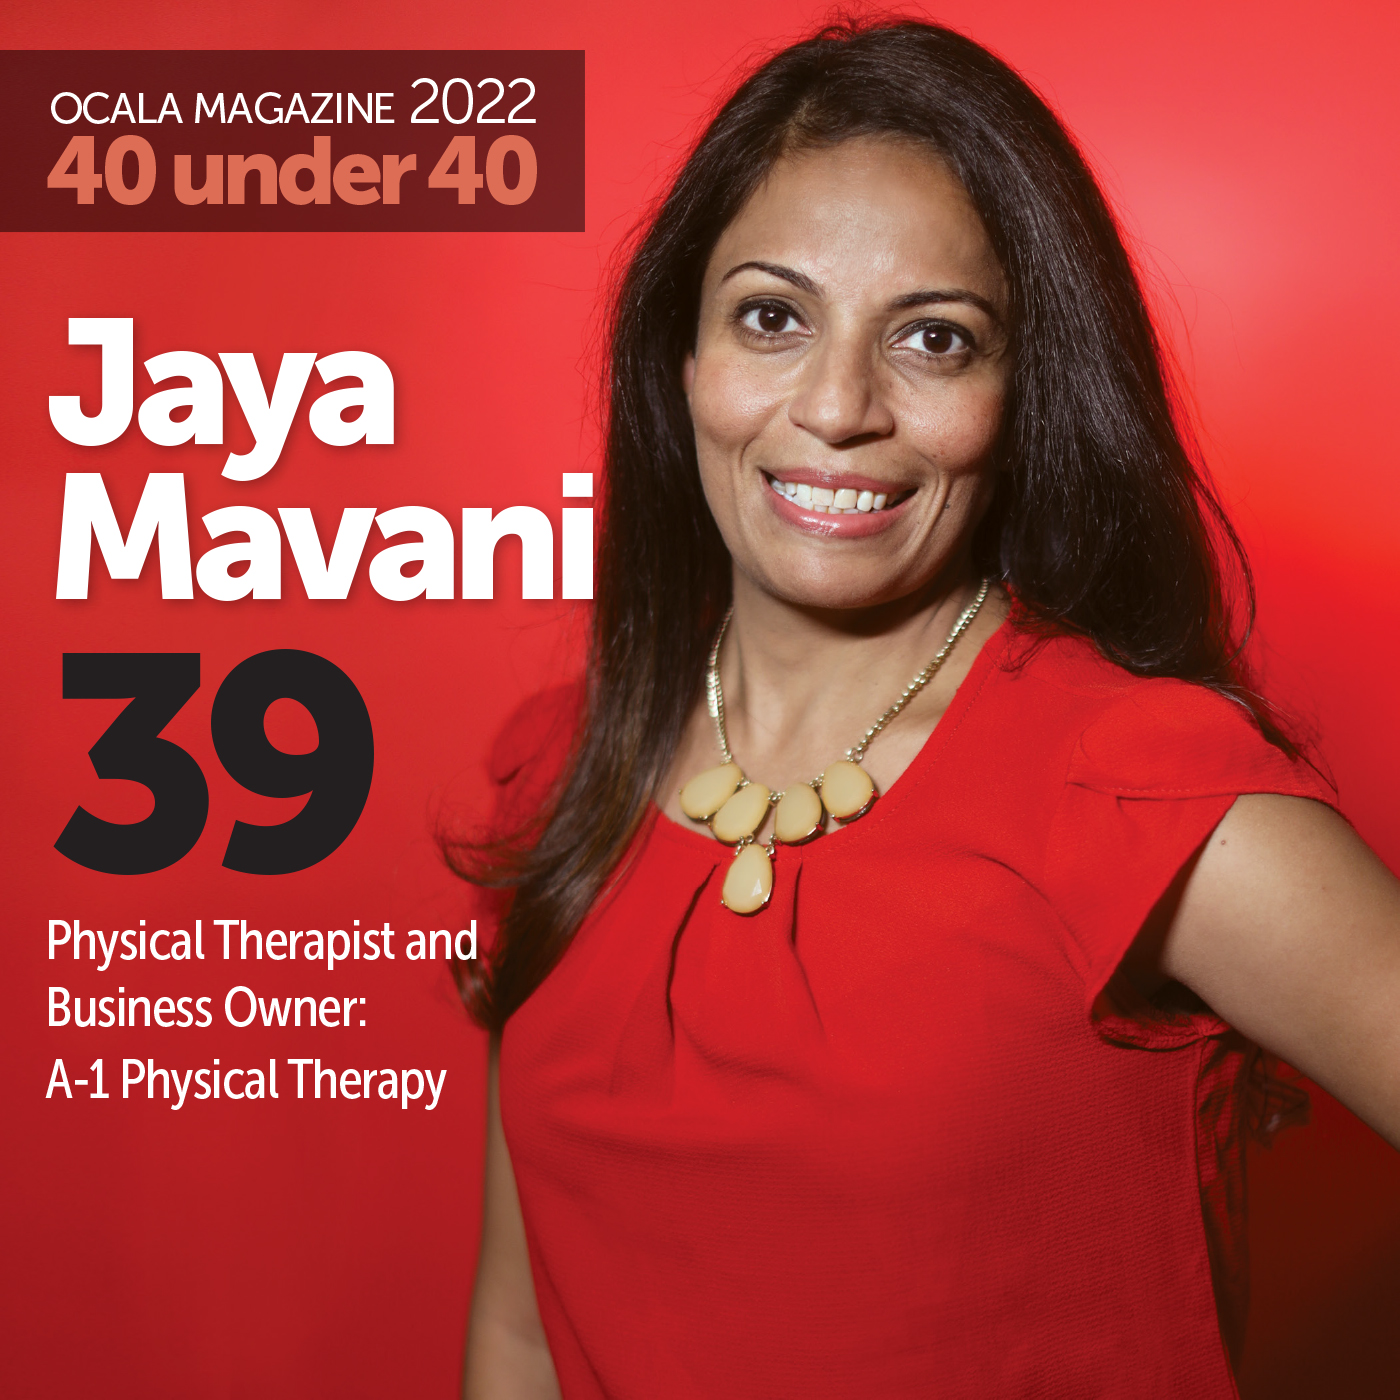 Jaya Mavani Ocala Magazine 2022 40 under 40